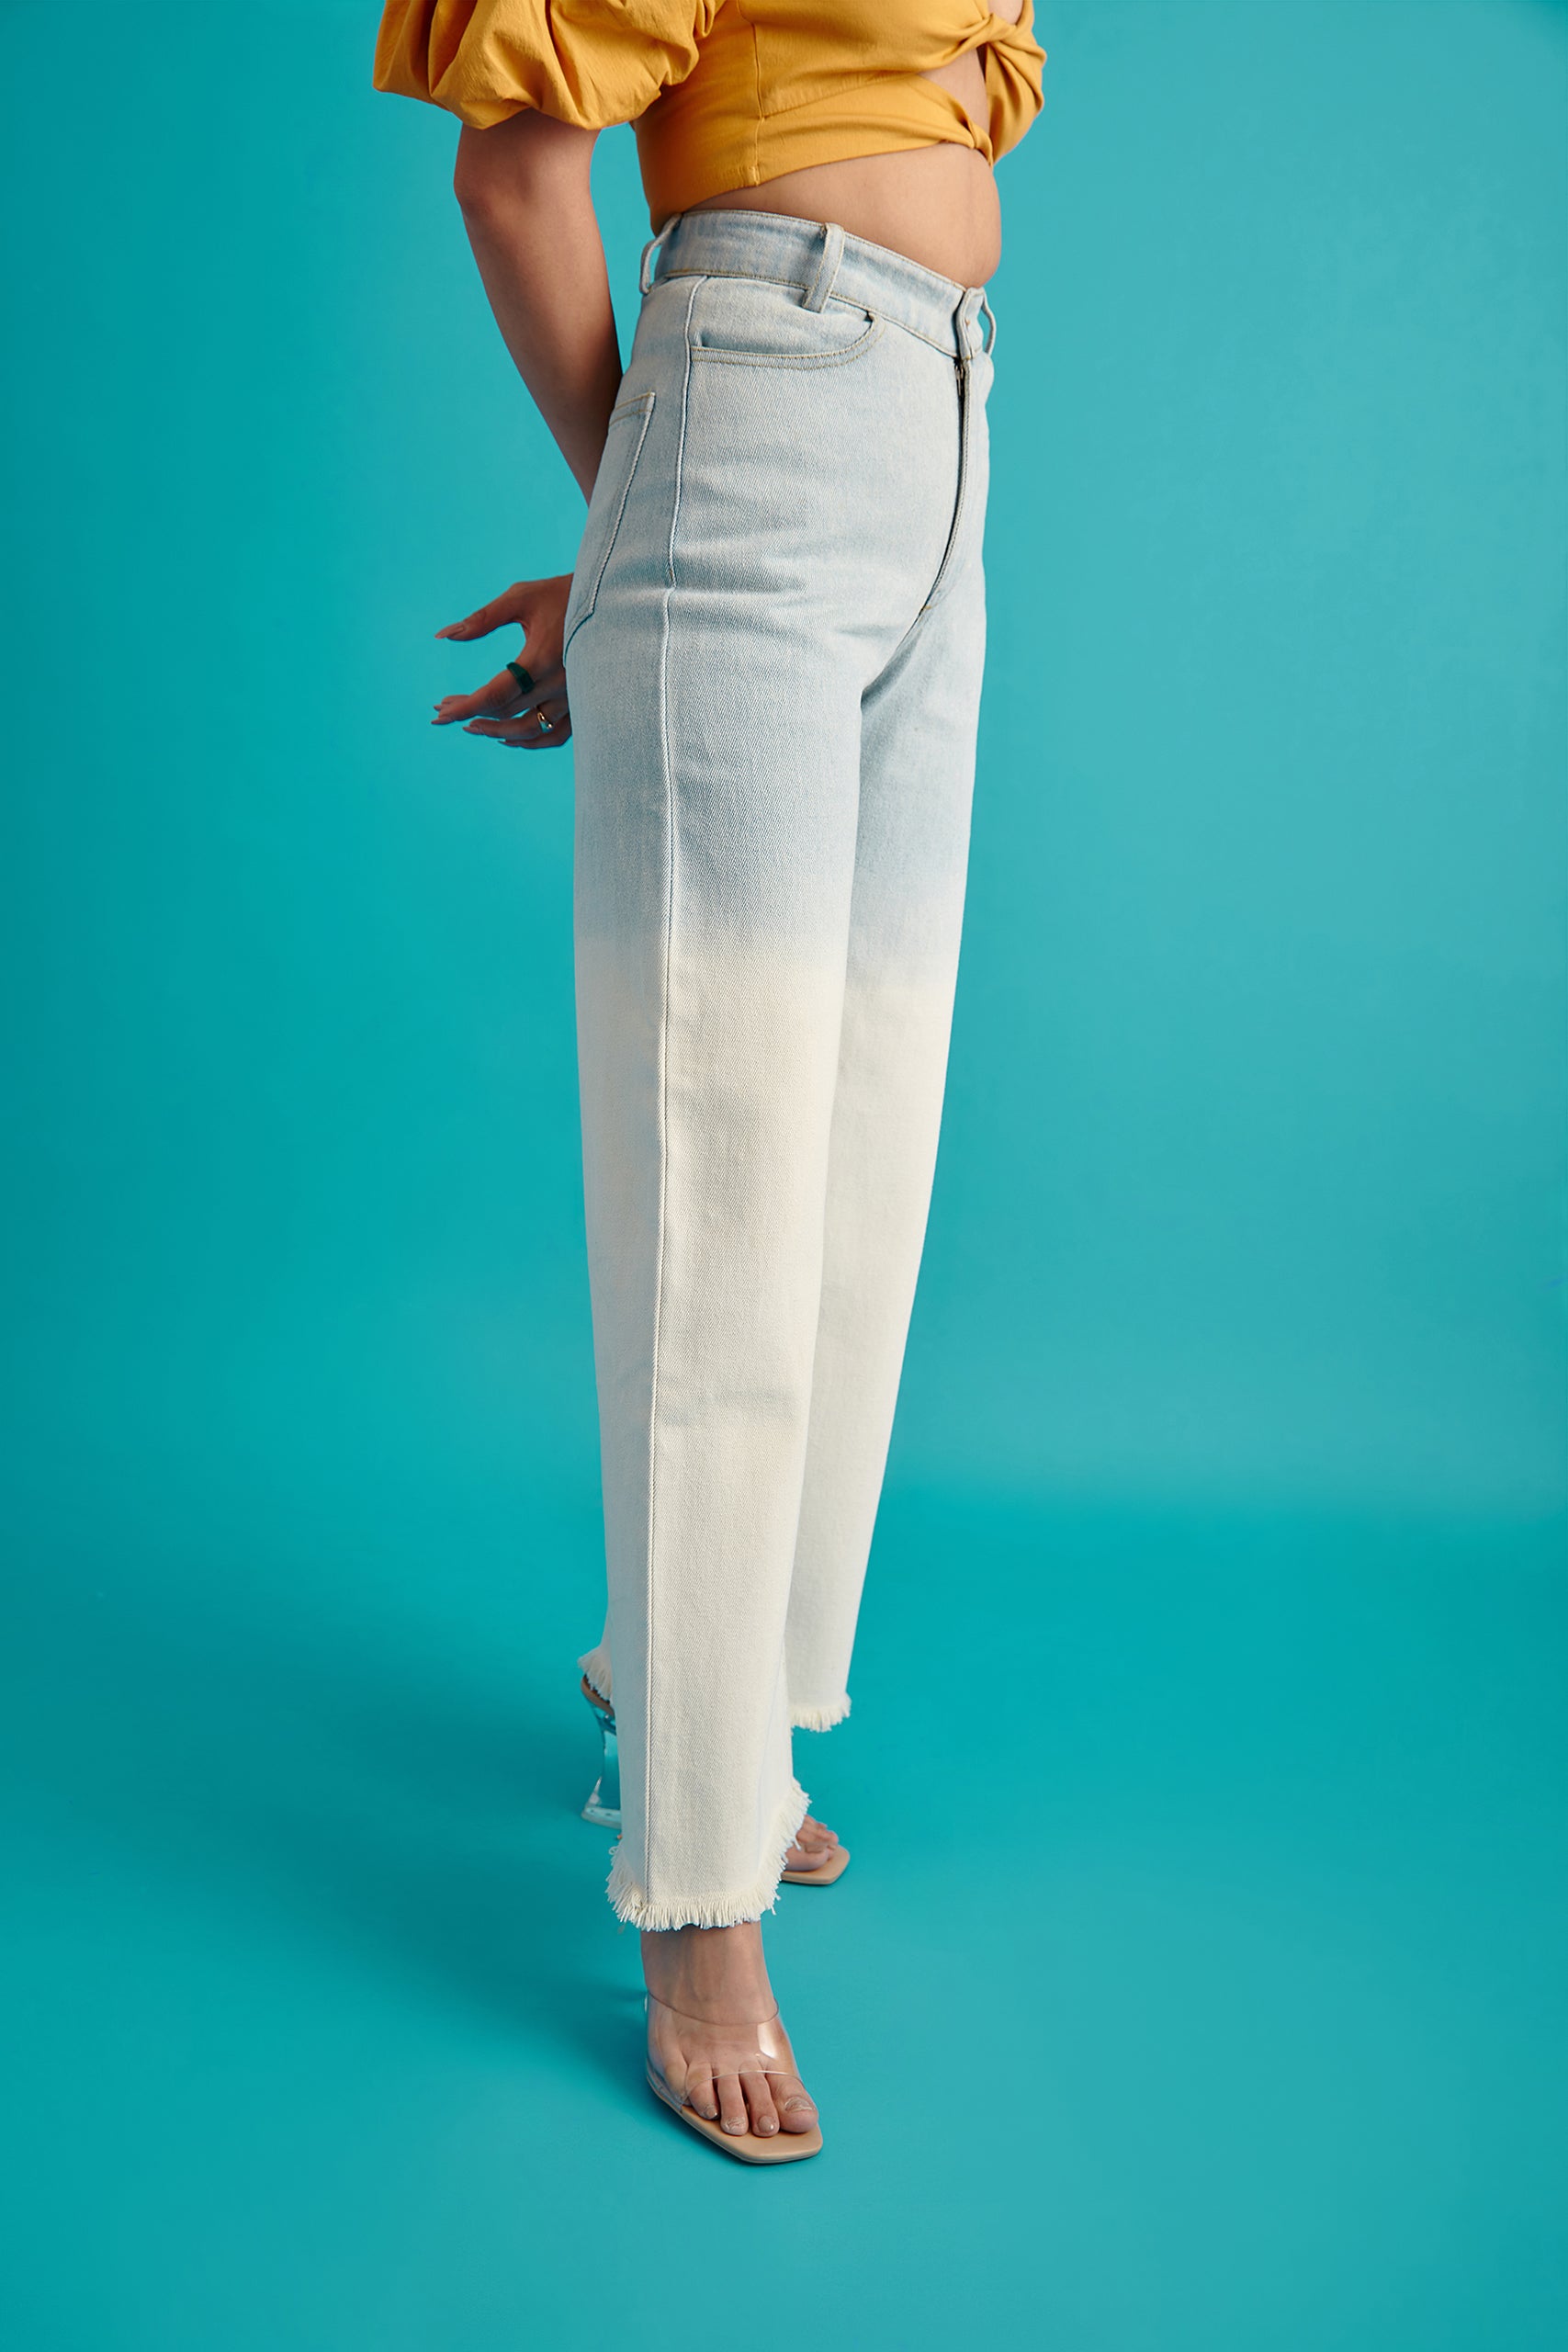 White Ombre Denim Jeans(Single Color)